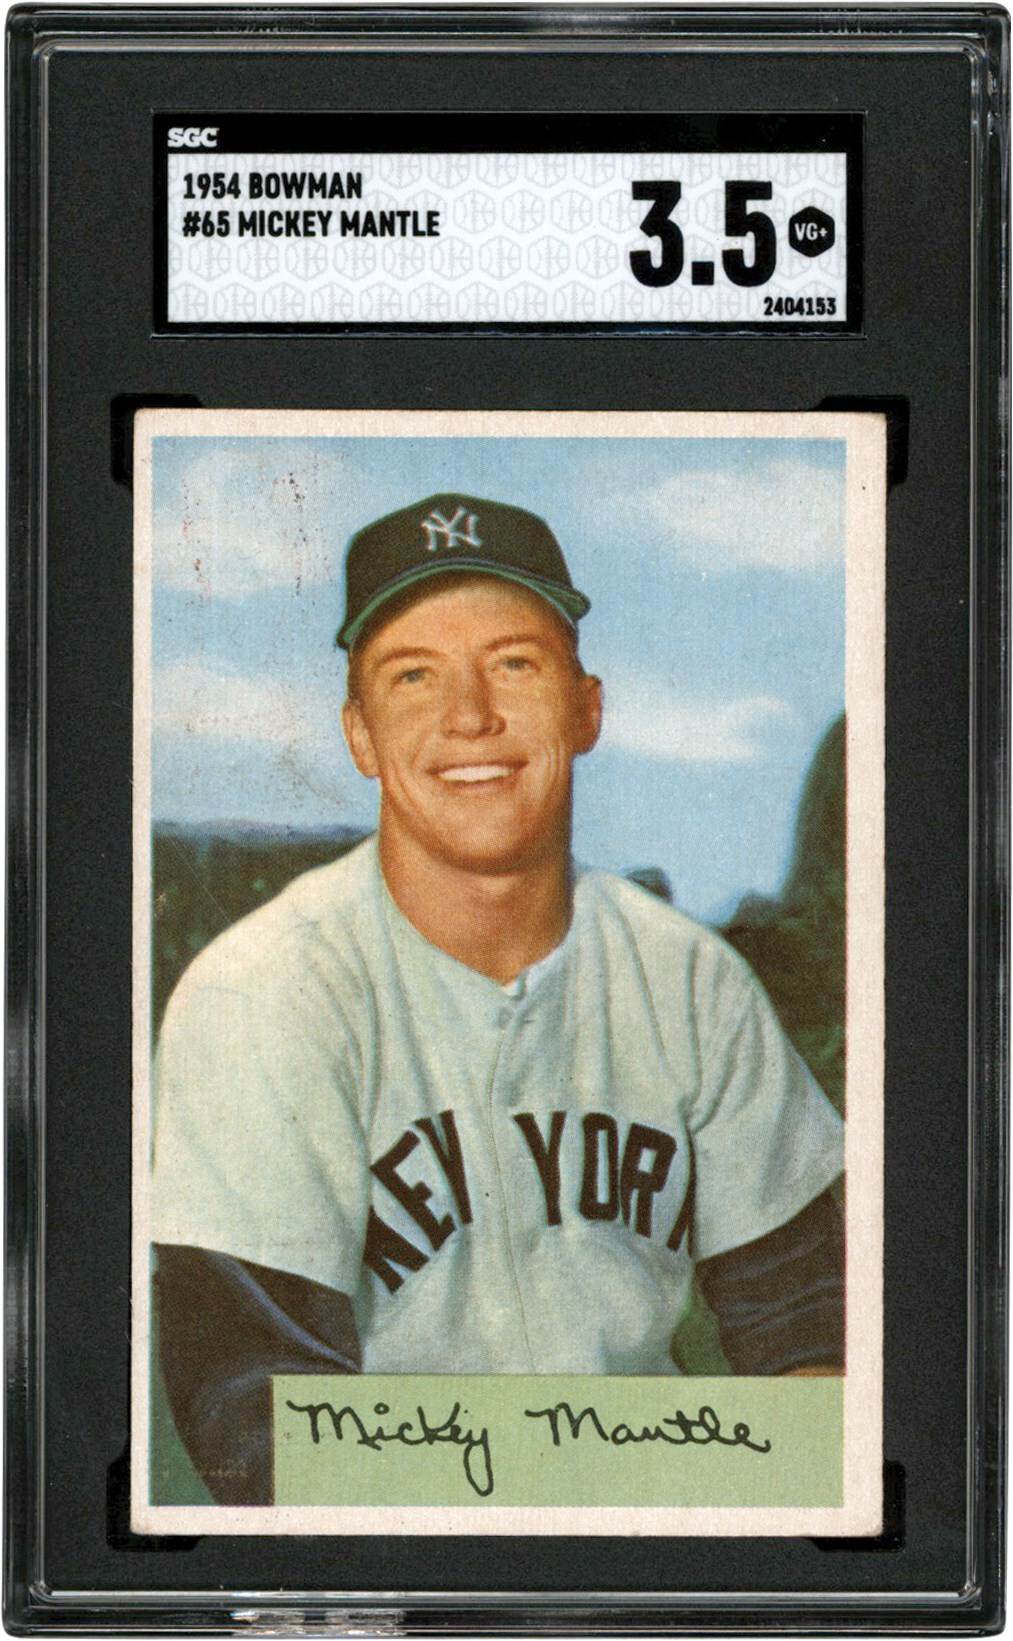 - 1954 Bowman Baseball #65 Mickey Mantle Card SGC VG+ 3.5